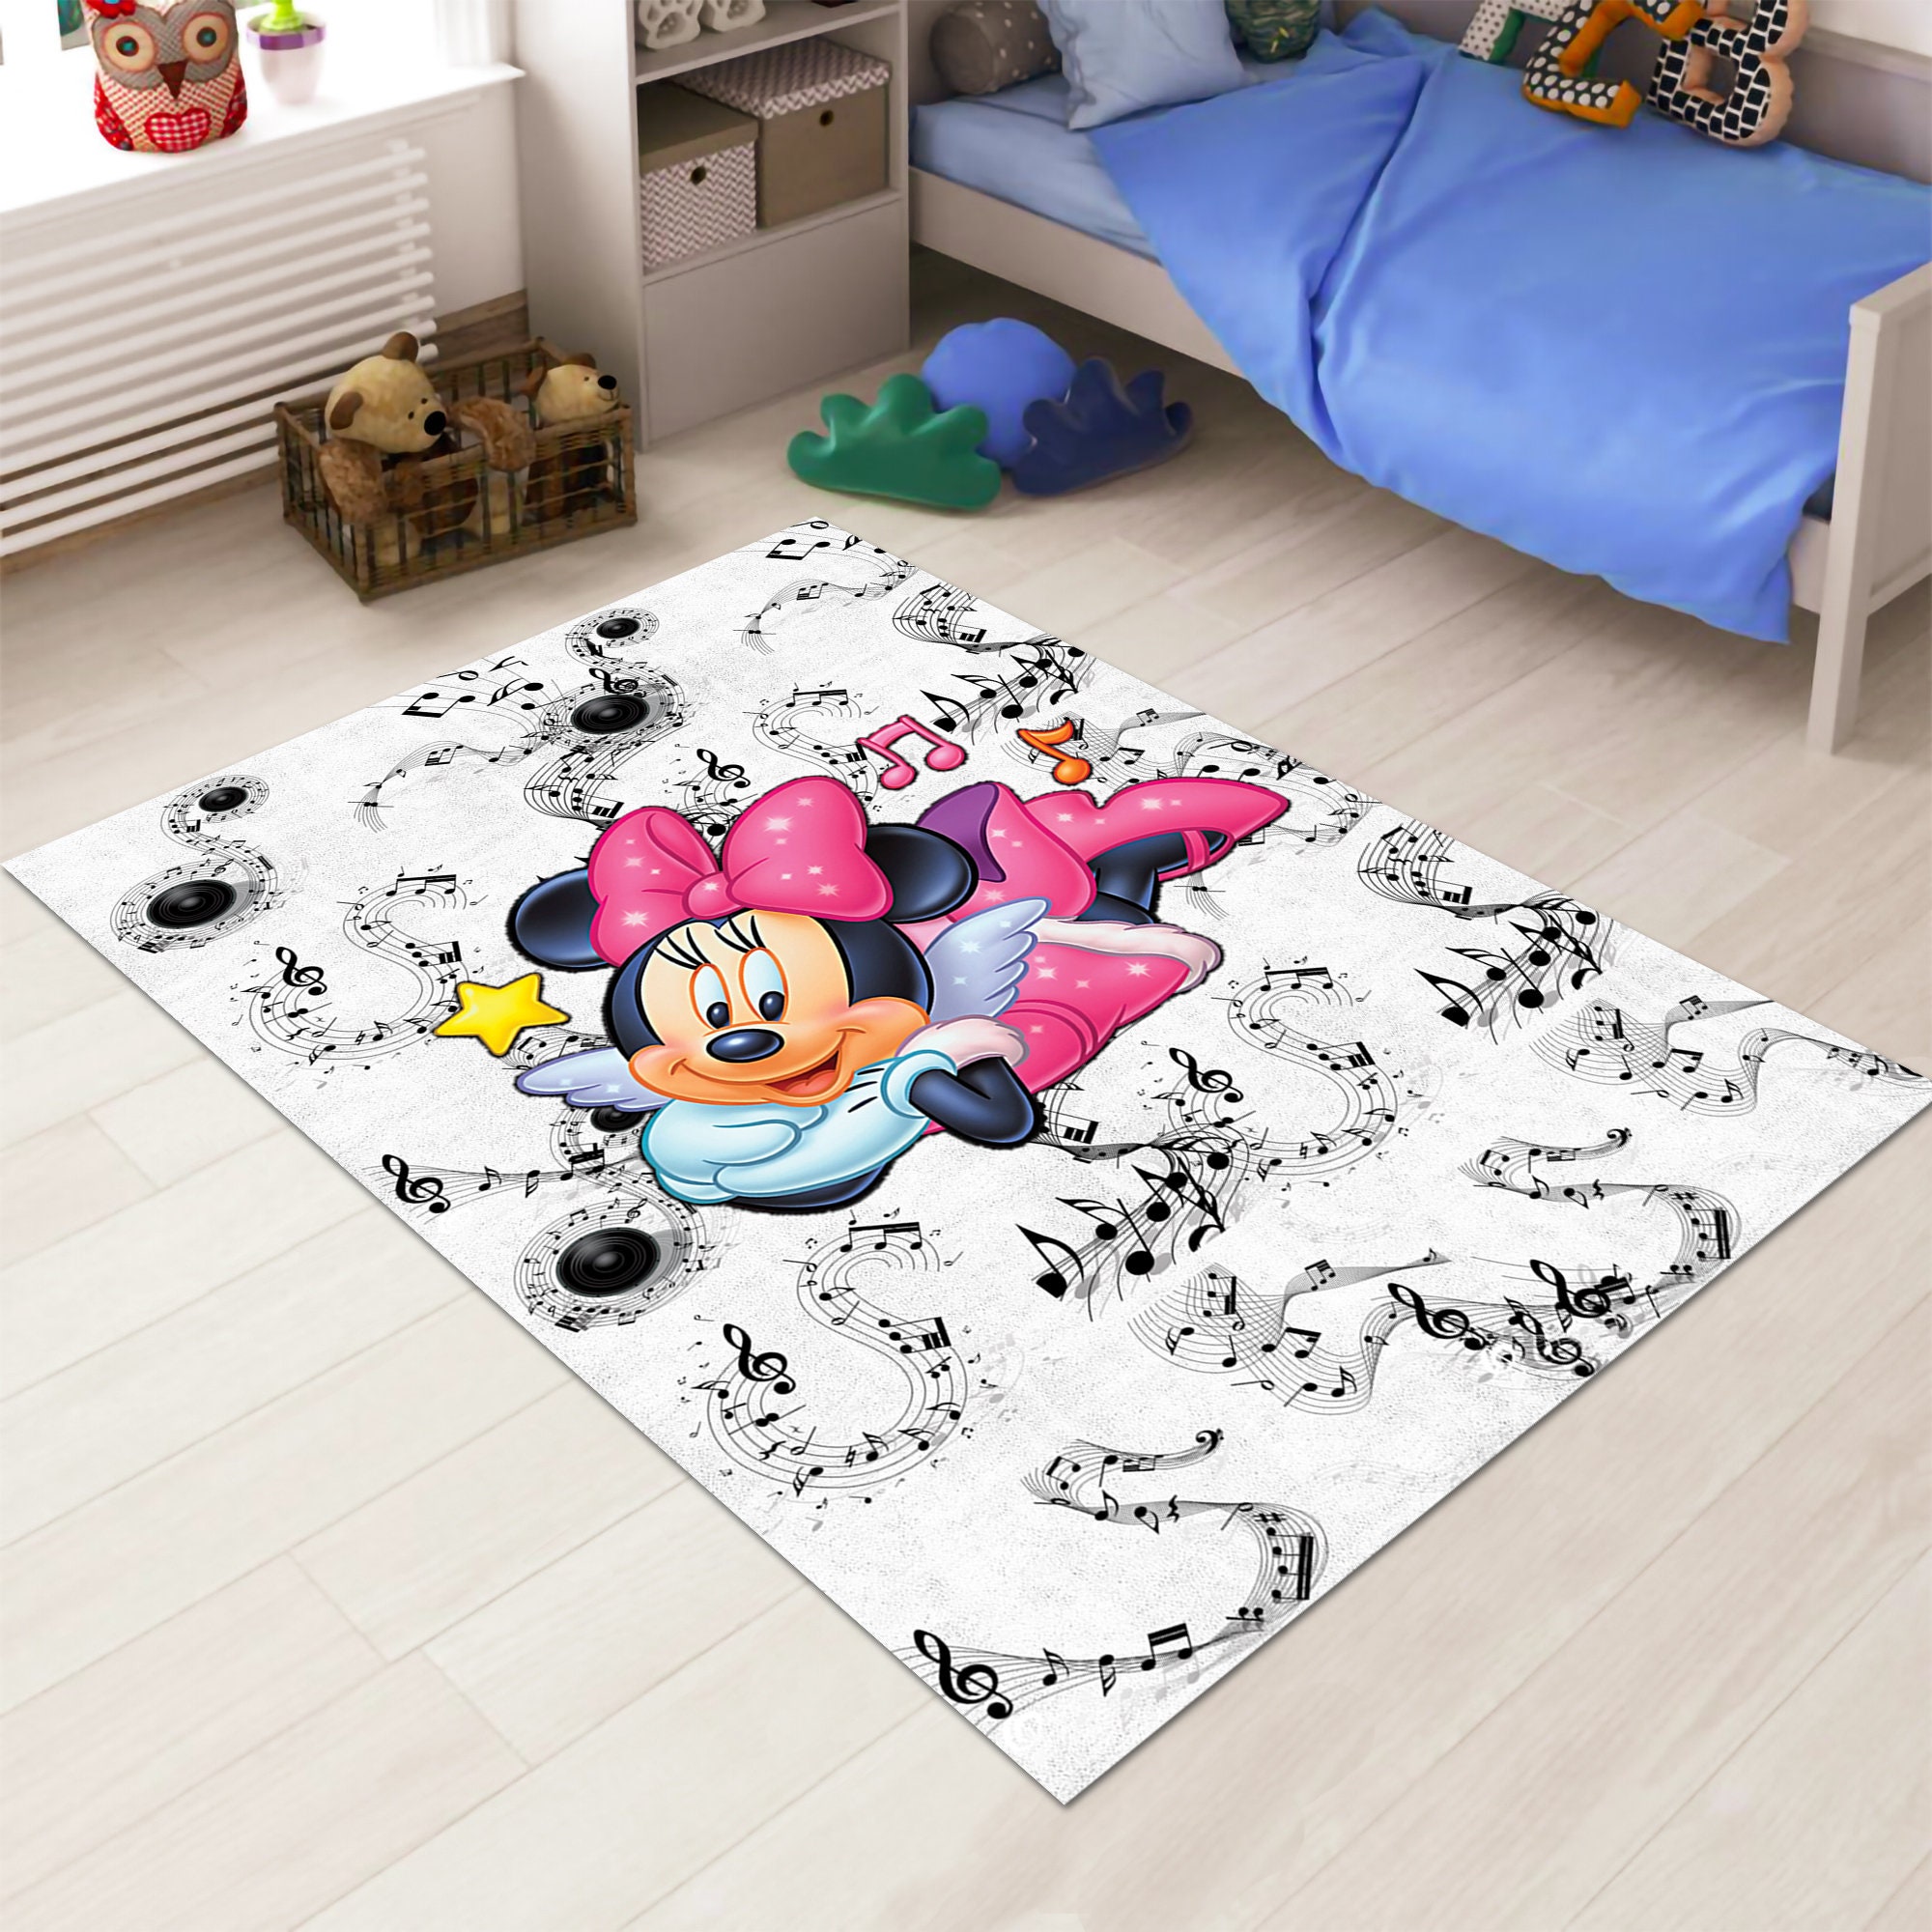 Discover Minnie Rug, Mouse Rug, Cartoon Rug, Gift for Daughter, Colorful Rug, Kids Room Rug, Nursery Decor,Kids Decor,Cute Rug